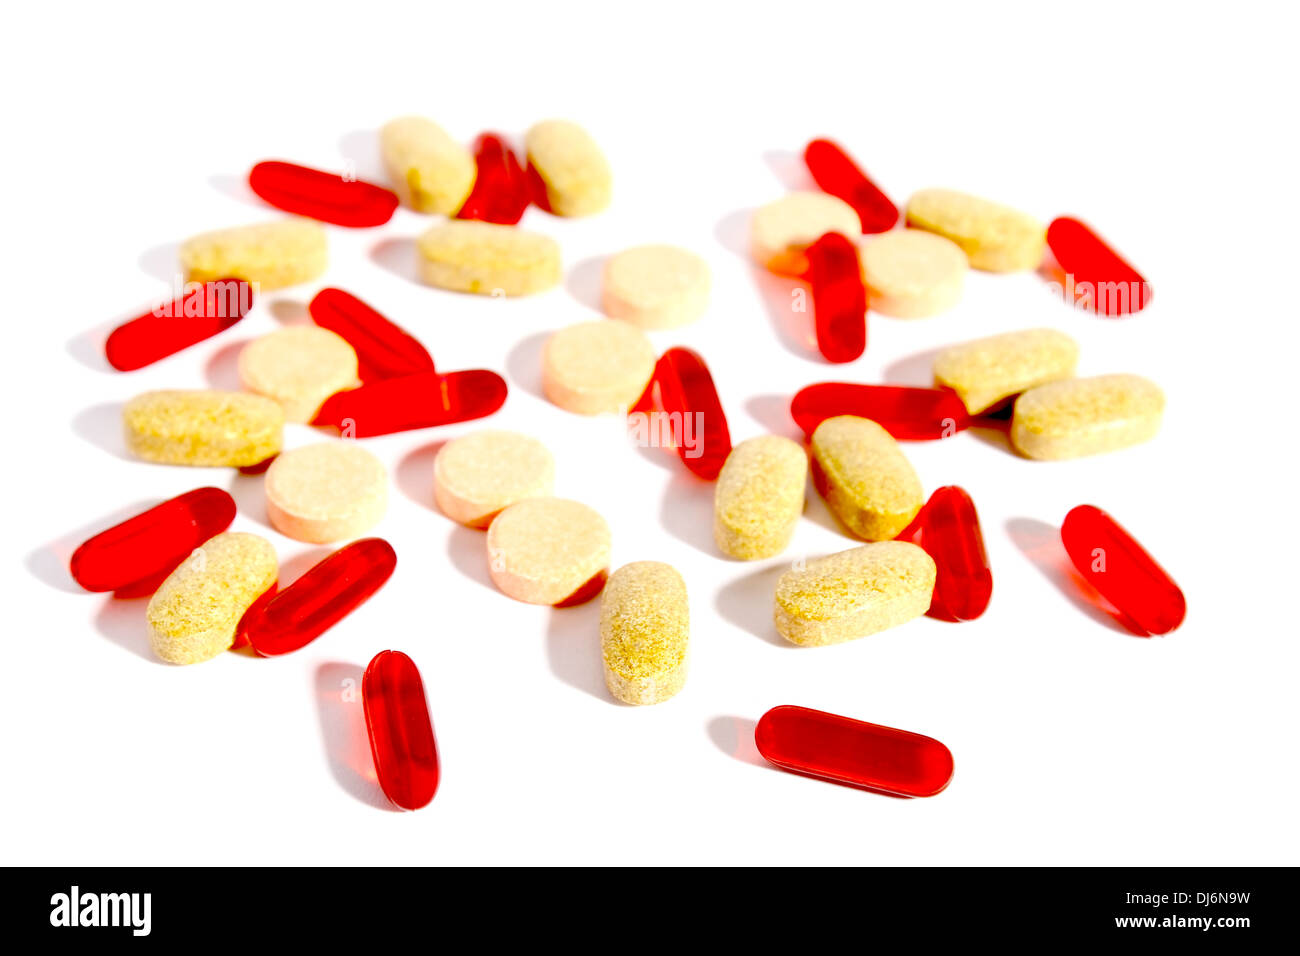 Pills, vitamins, medicines, pills, таблетки, витамины, лекарства, пилюли Stock Photo